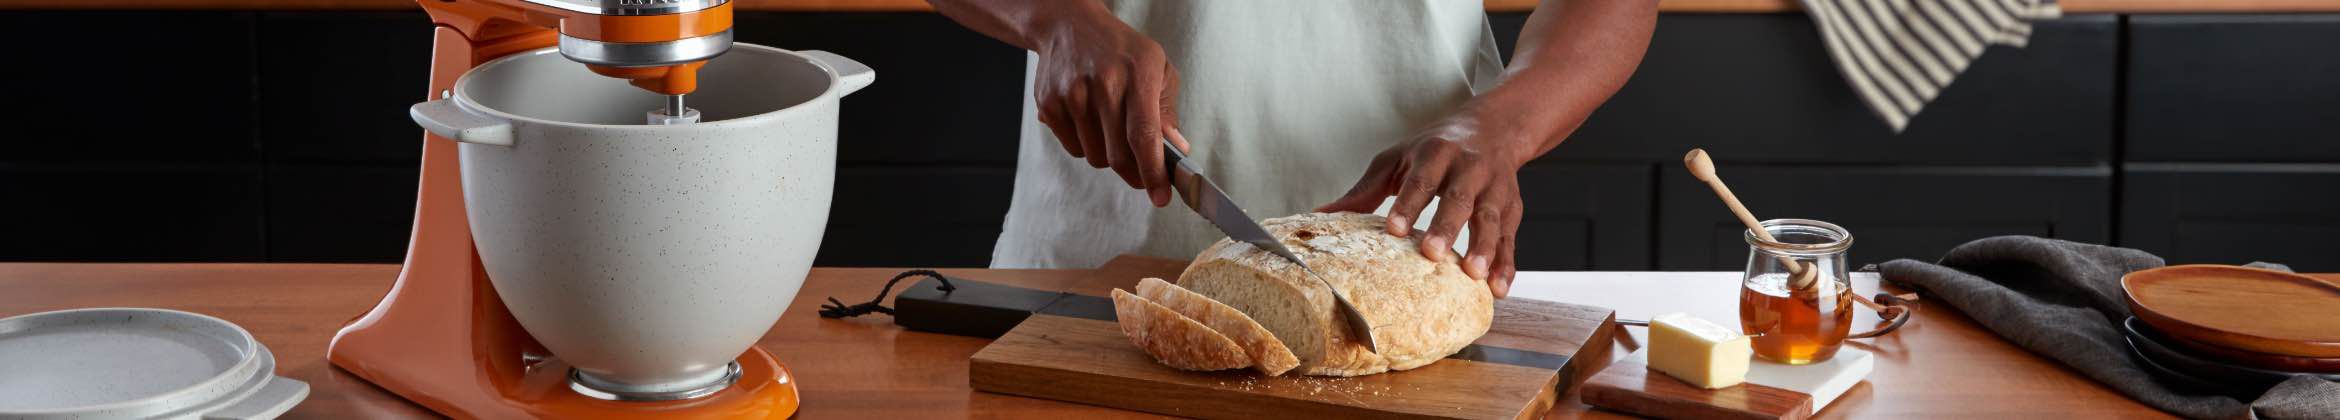 Slicing a flesh loaf of bread